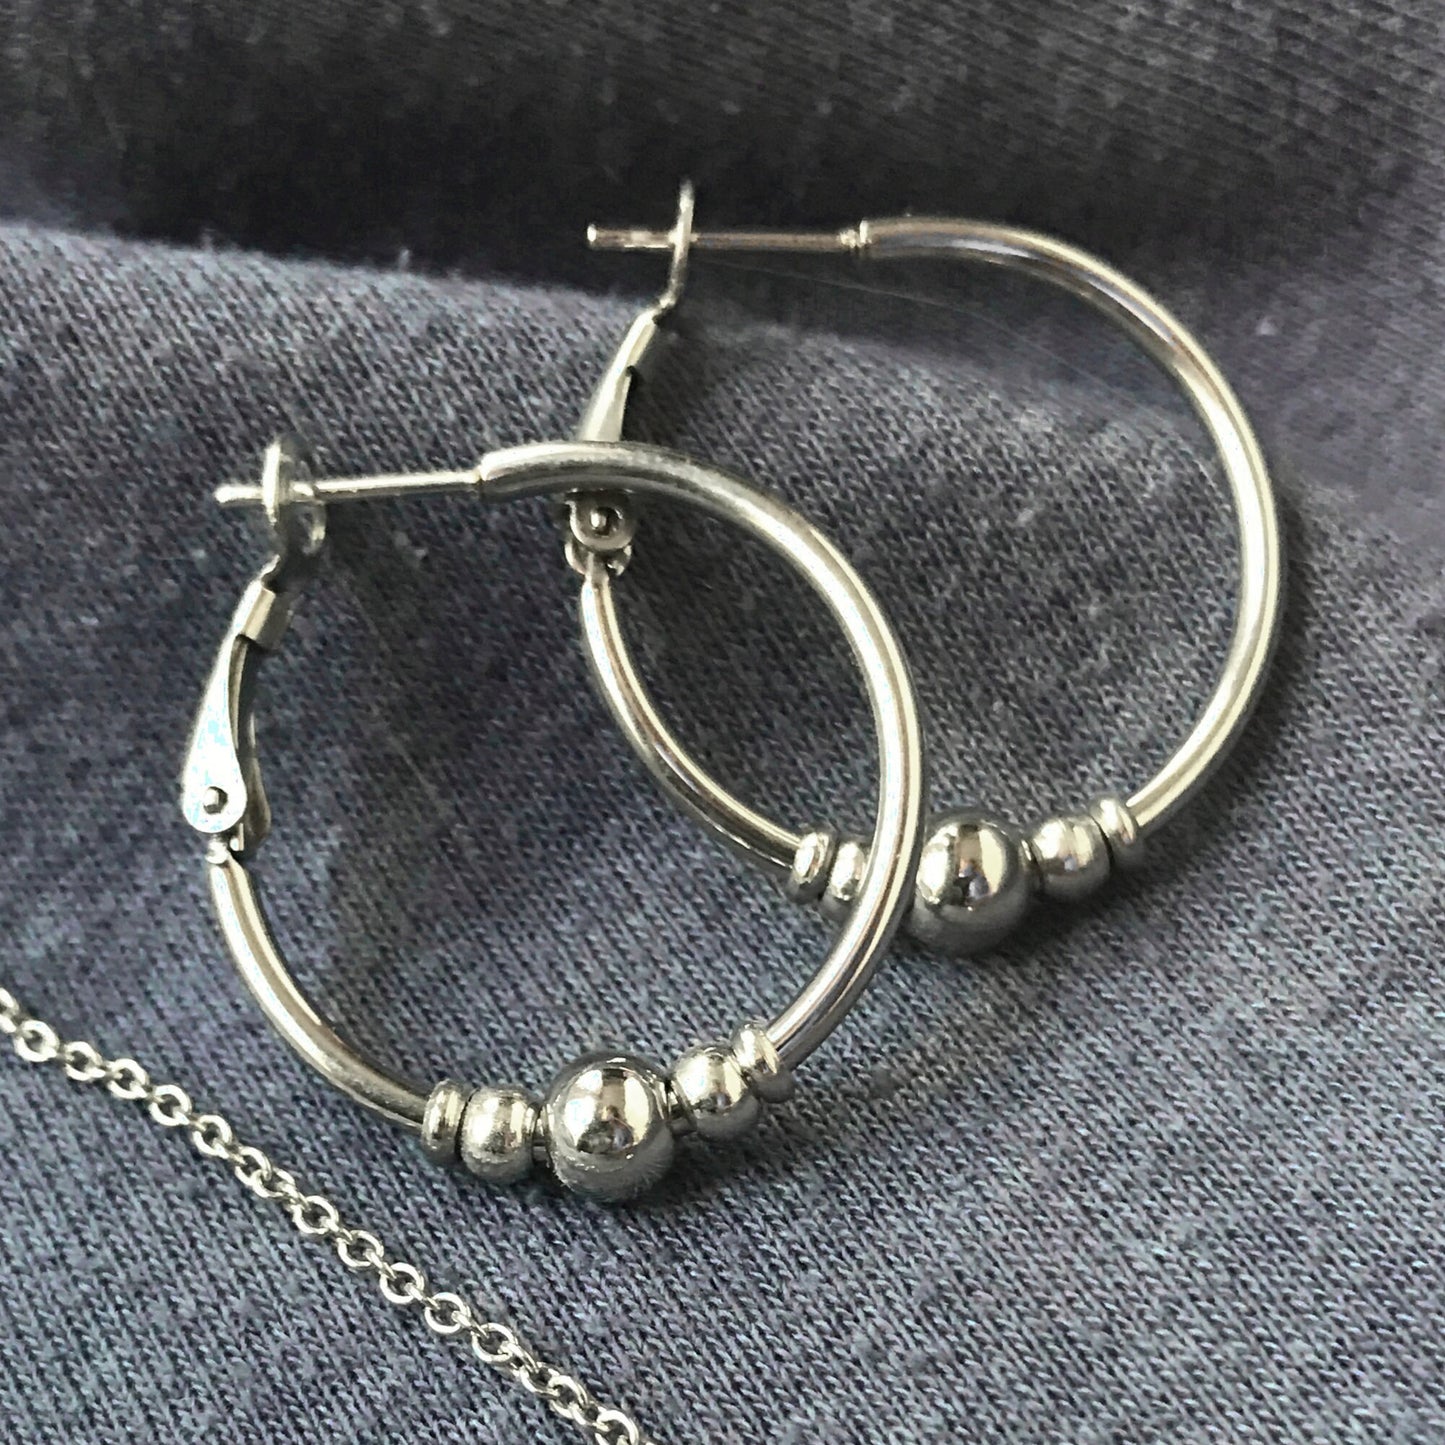 Beaded Hoop Earrings Medium, Stainless Steel Jewelry for Women, Silver Graduated Bead Earrings, Gift for Girlfriend